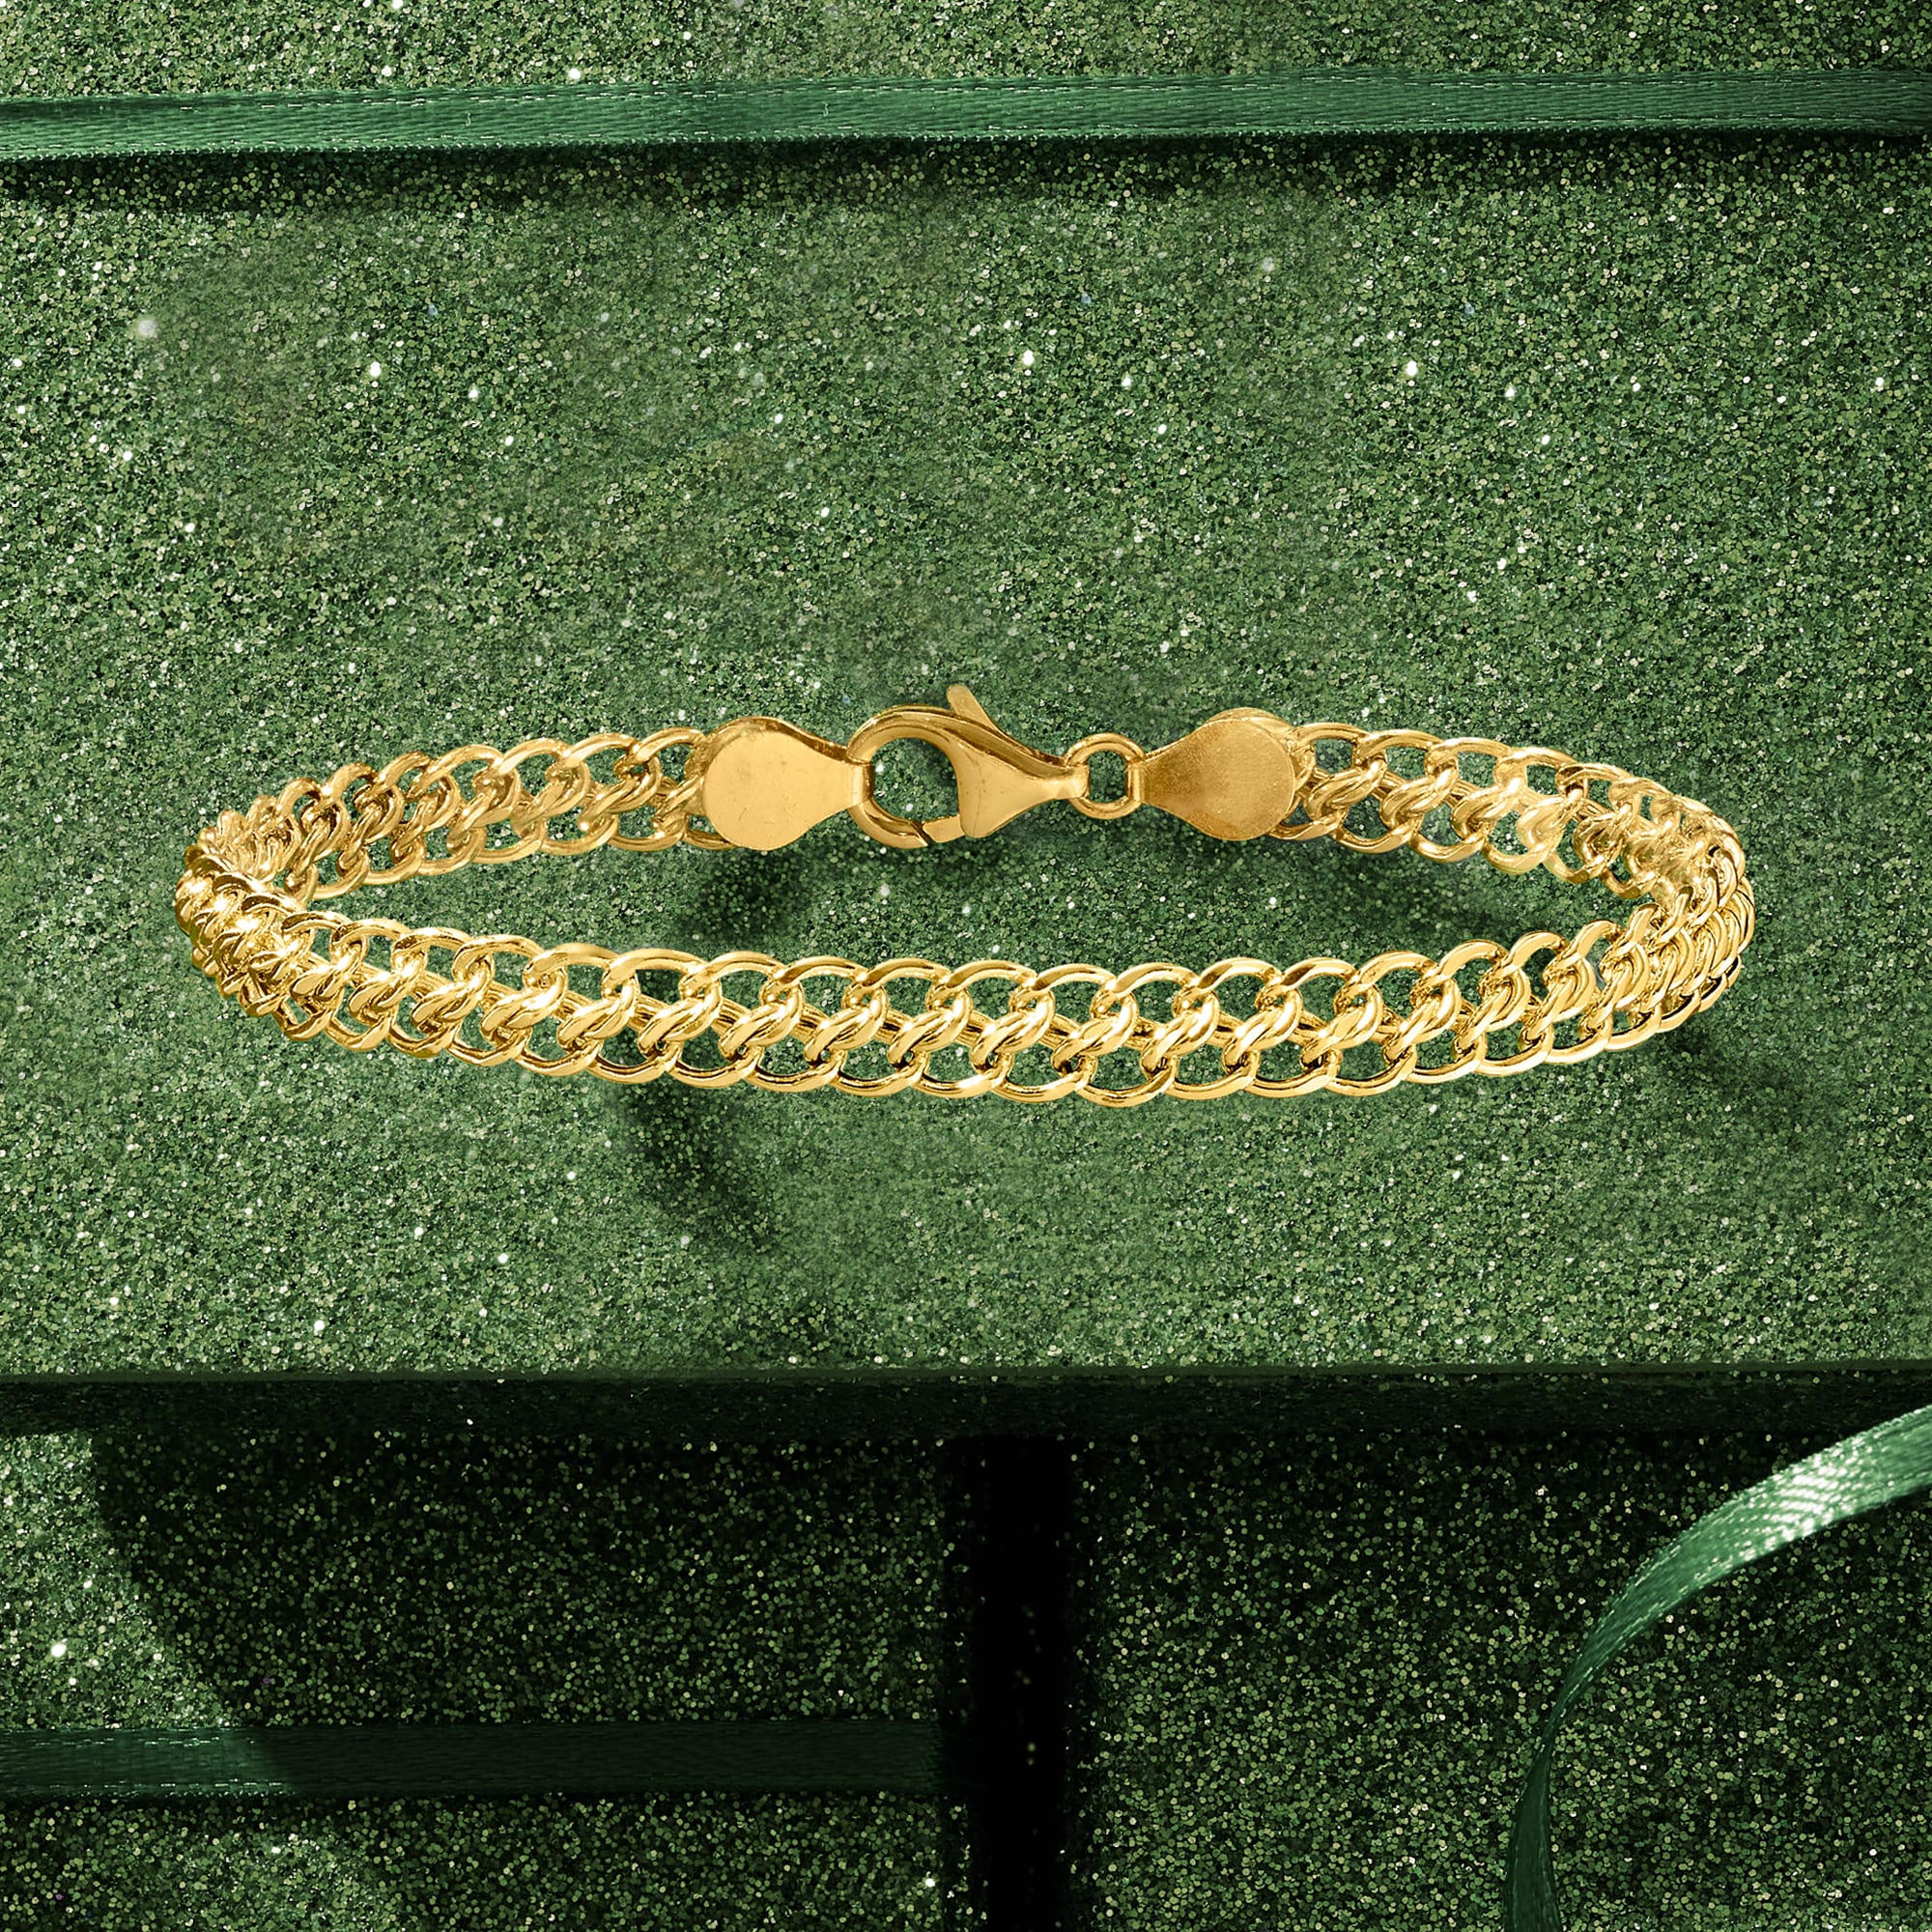 Thin Flat Oval Link 14K Solid Gold Italian Chain Link Bracelet open Link  Classic Chain Bracelet, Great Everyday Wear Charm Bracelets -  Canada